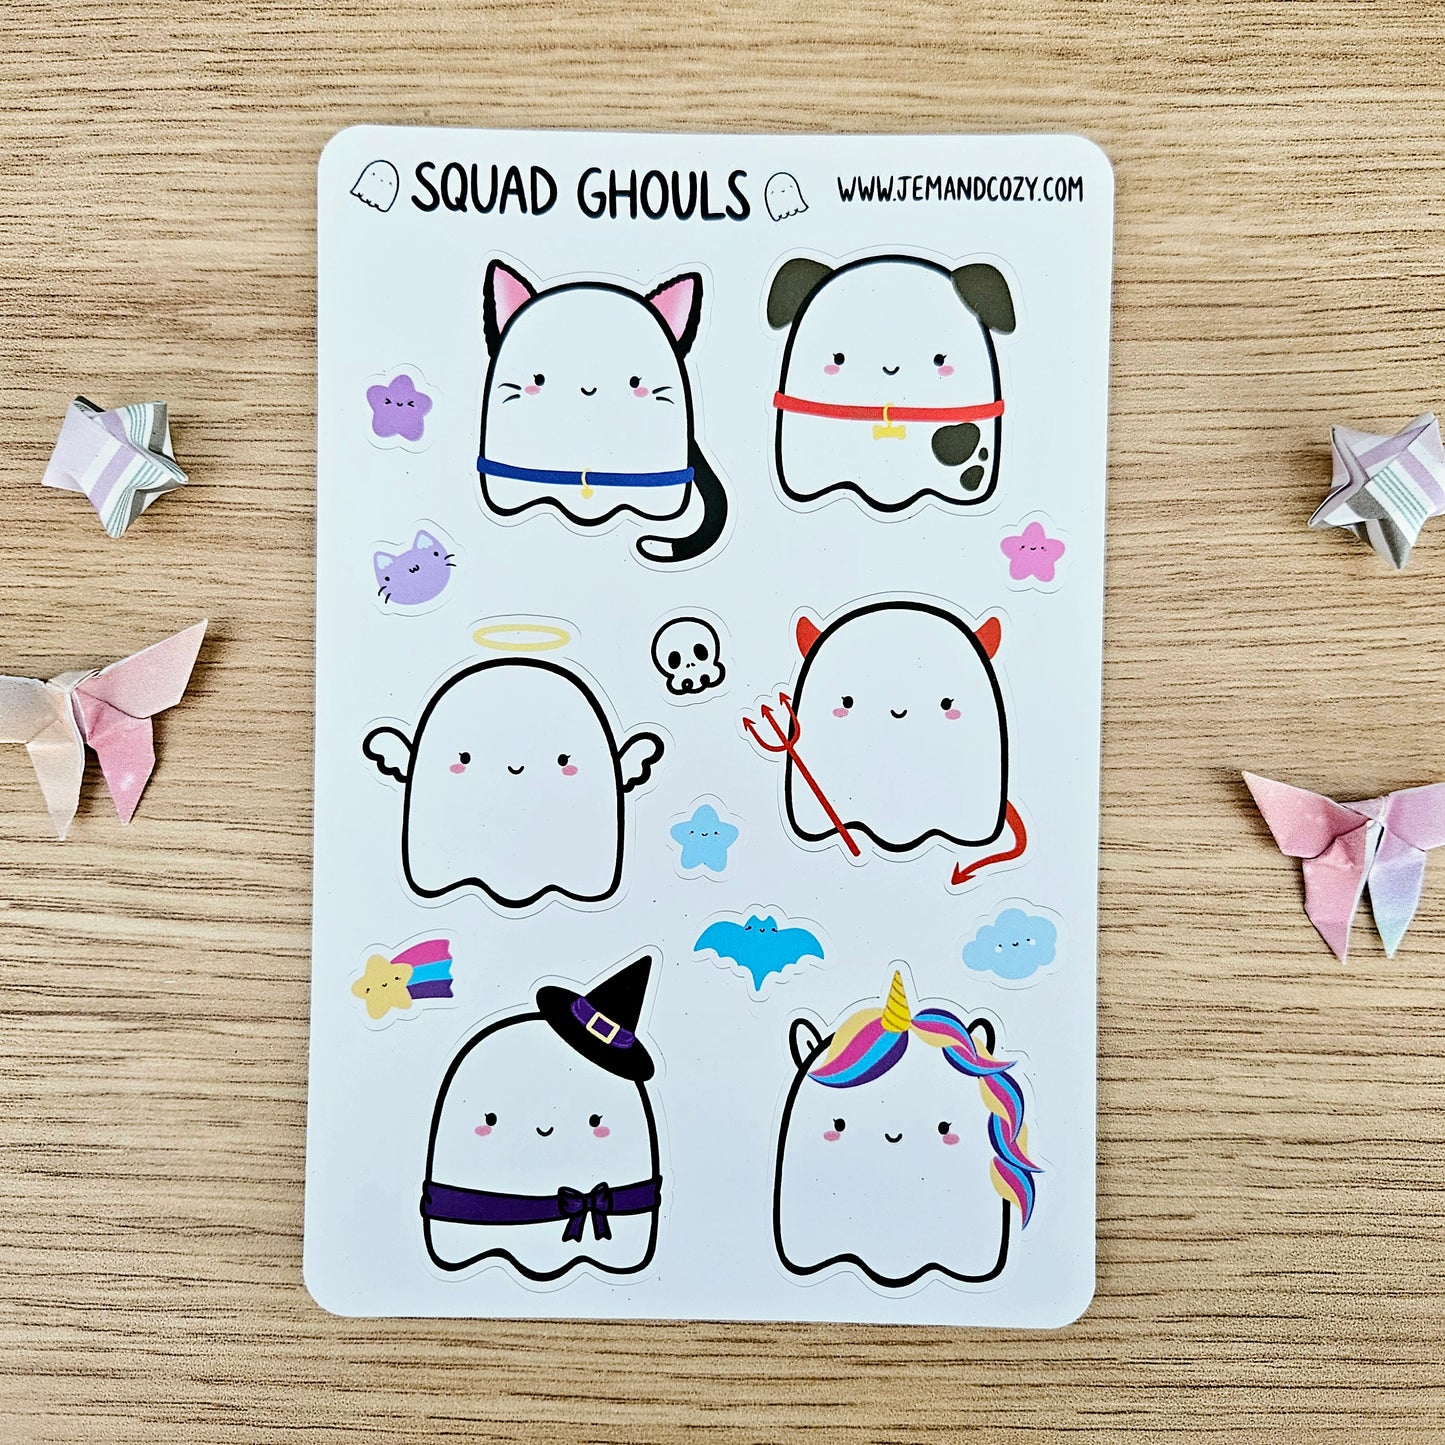 Original Squad Ghouls Sticker Sheet (4x6")